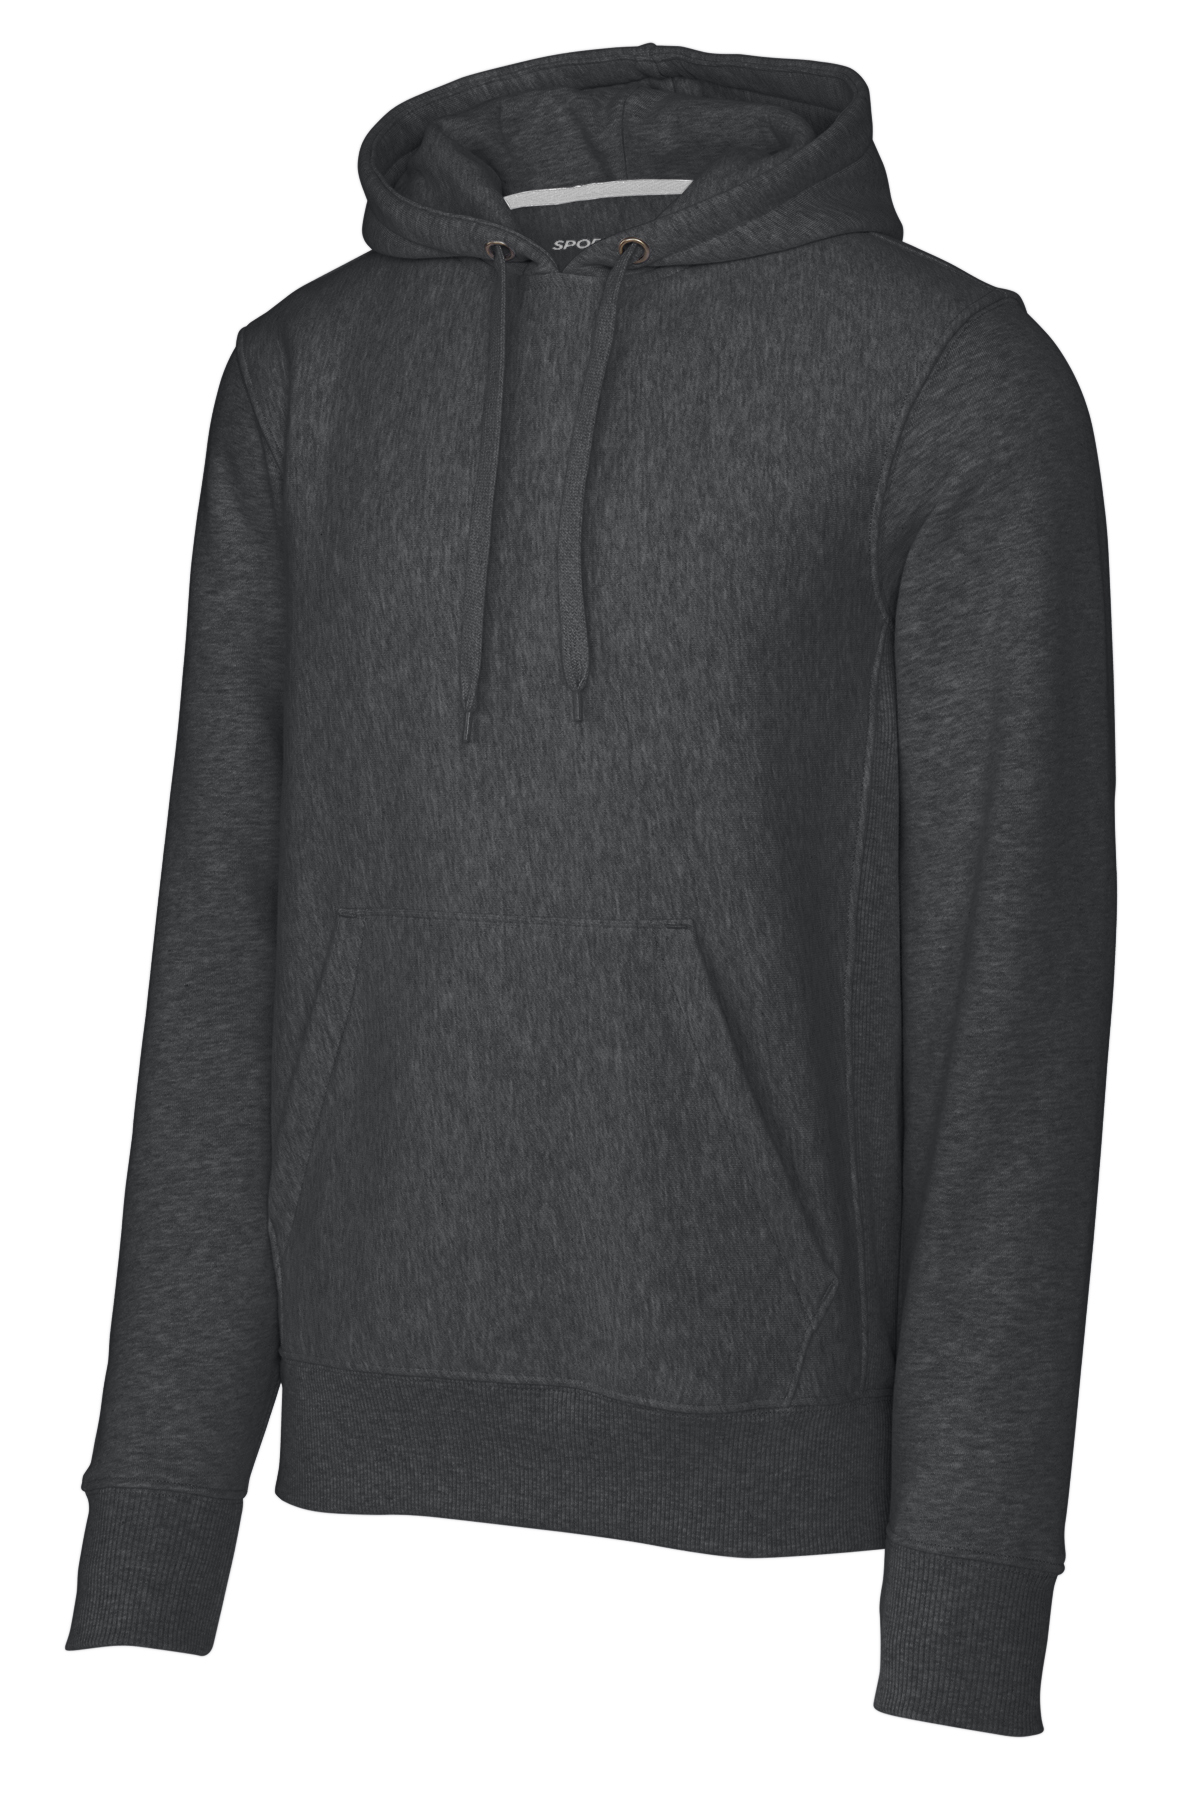 Sport-Tek Super Heavyweight Pullover Hooded Sweatshirt | Product